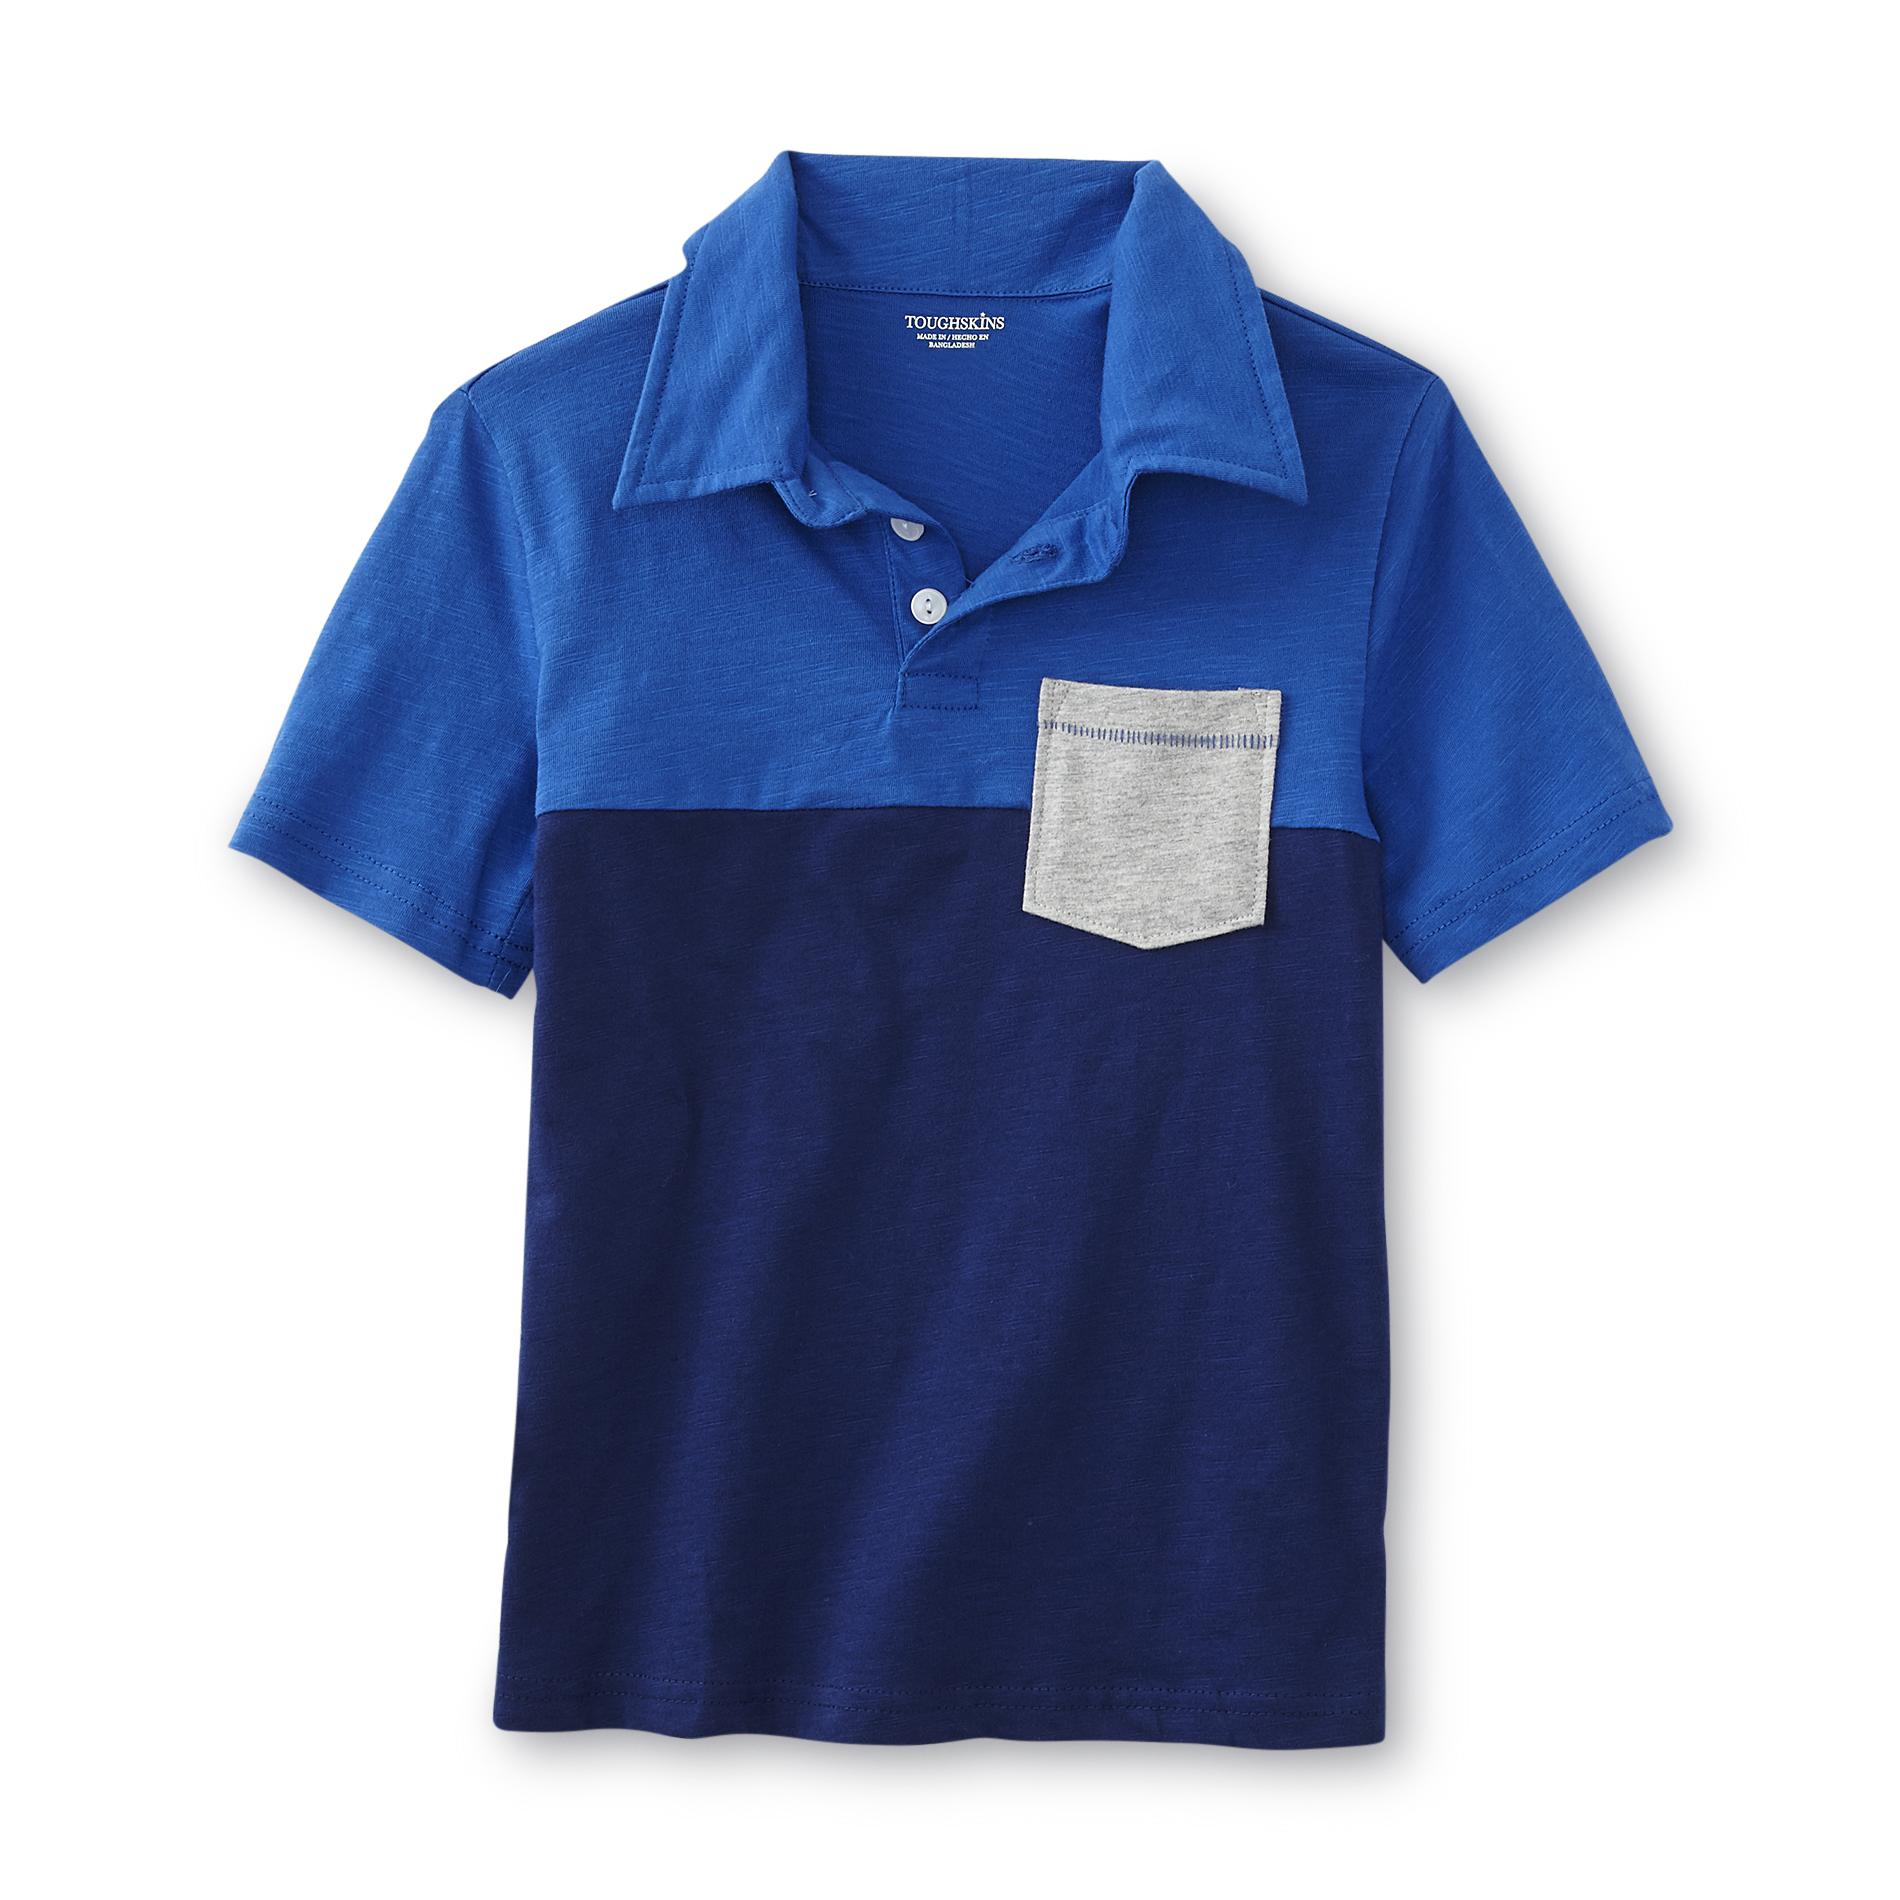 Toughskins Infant & Toddler Boy's Polo Shirt - Colorblock